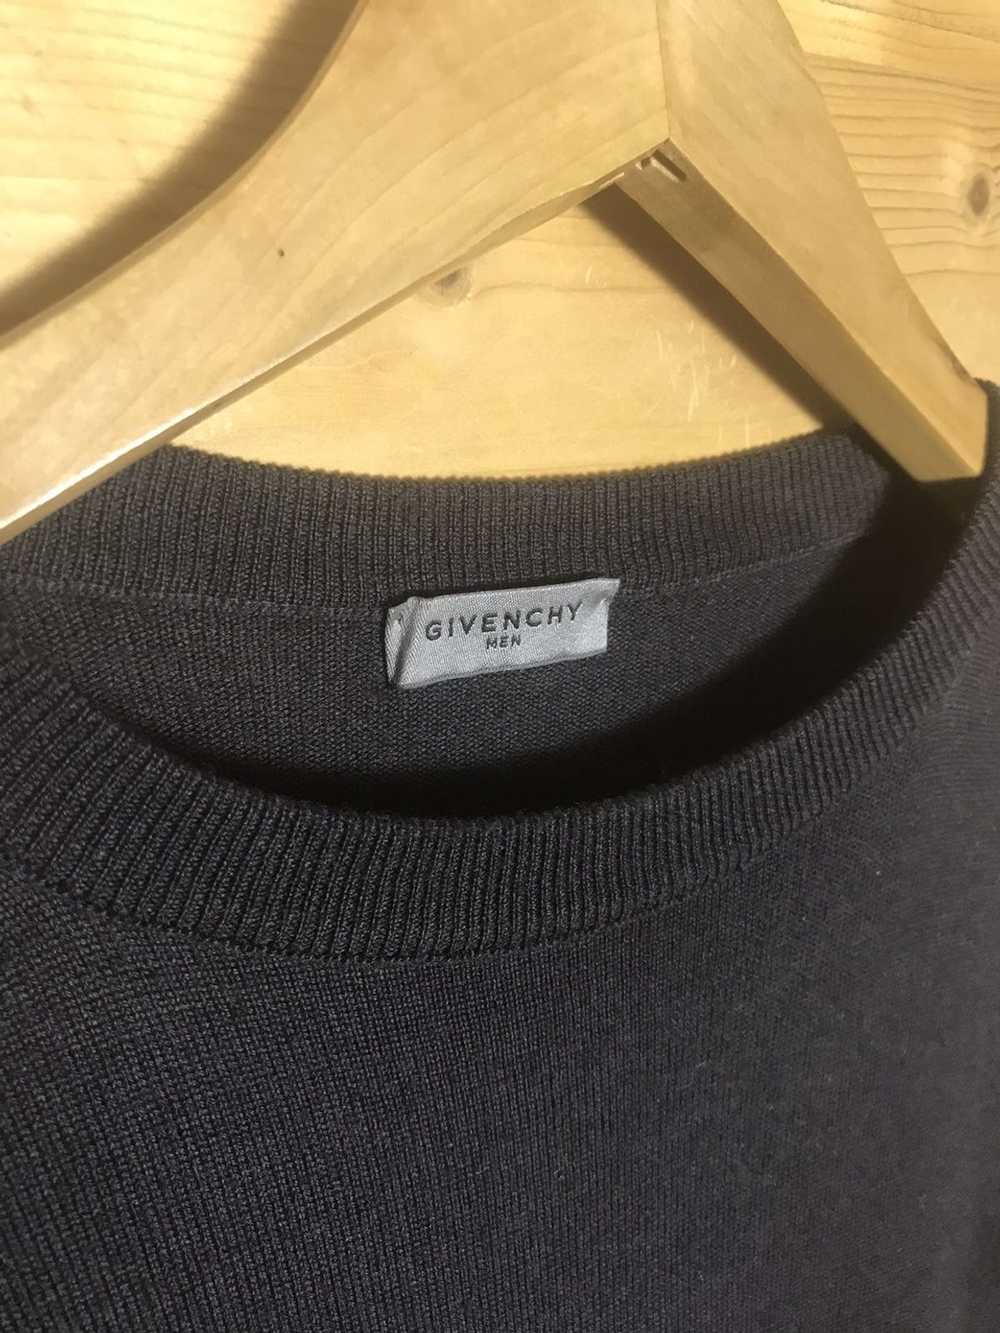 Givenchy × Luxury Givenchy black sweater - image 3